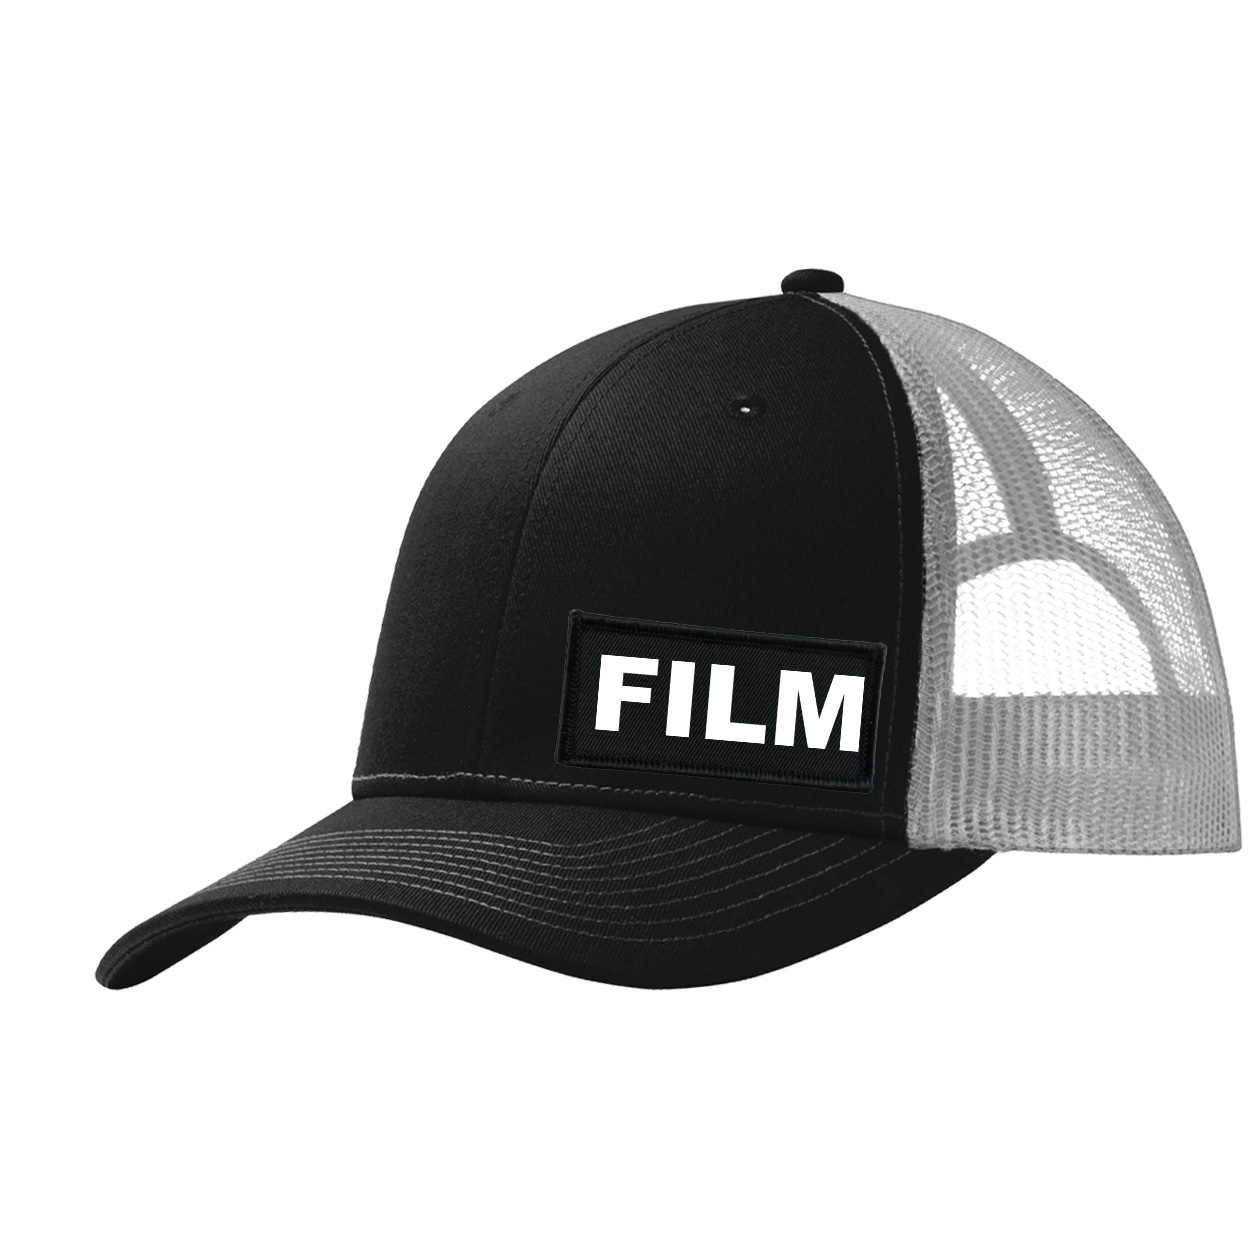 Film Brand Logo Night Out Woven Patch Snapback Trucker Hat Black/Gray